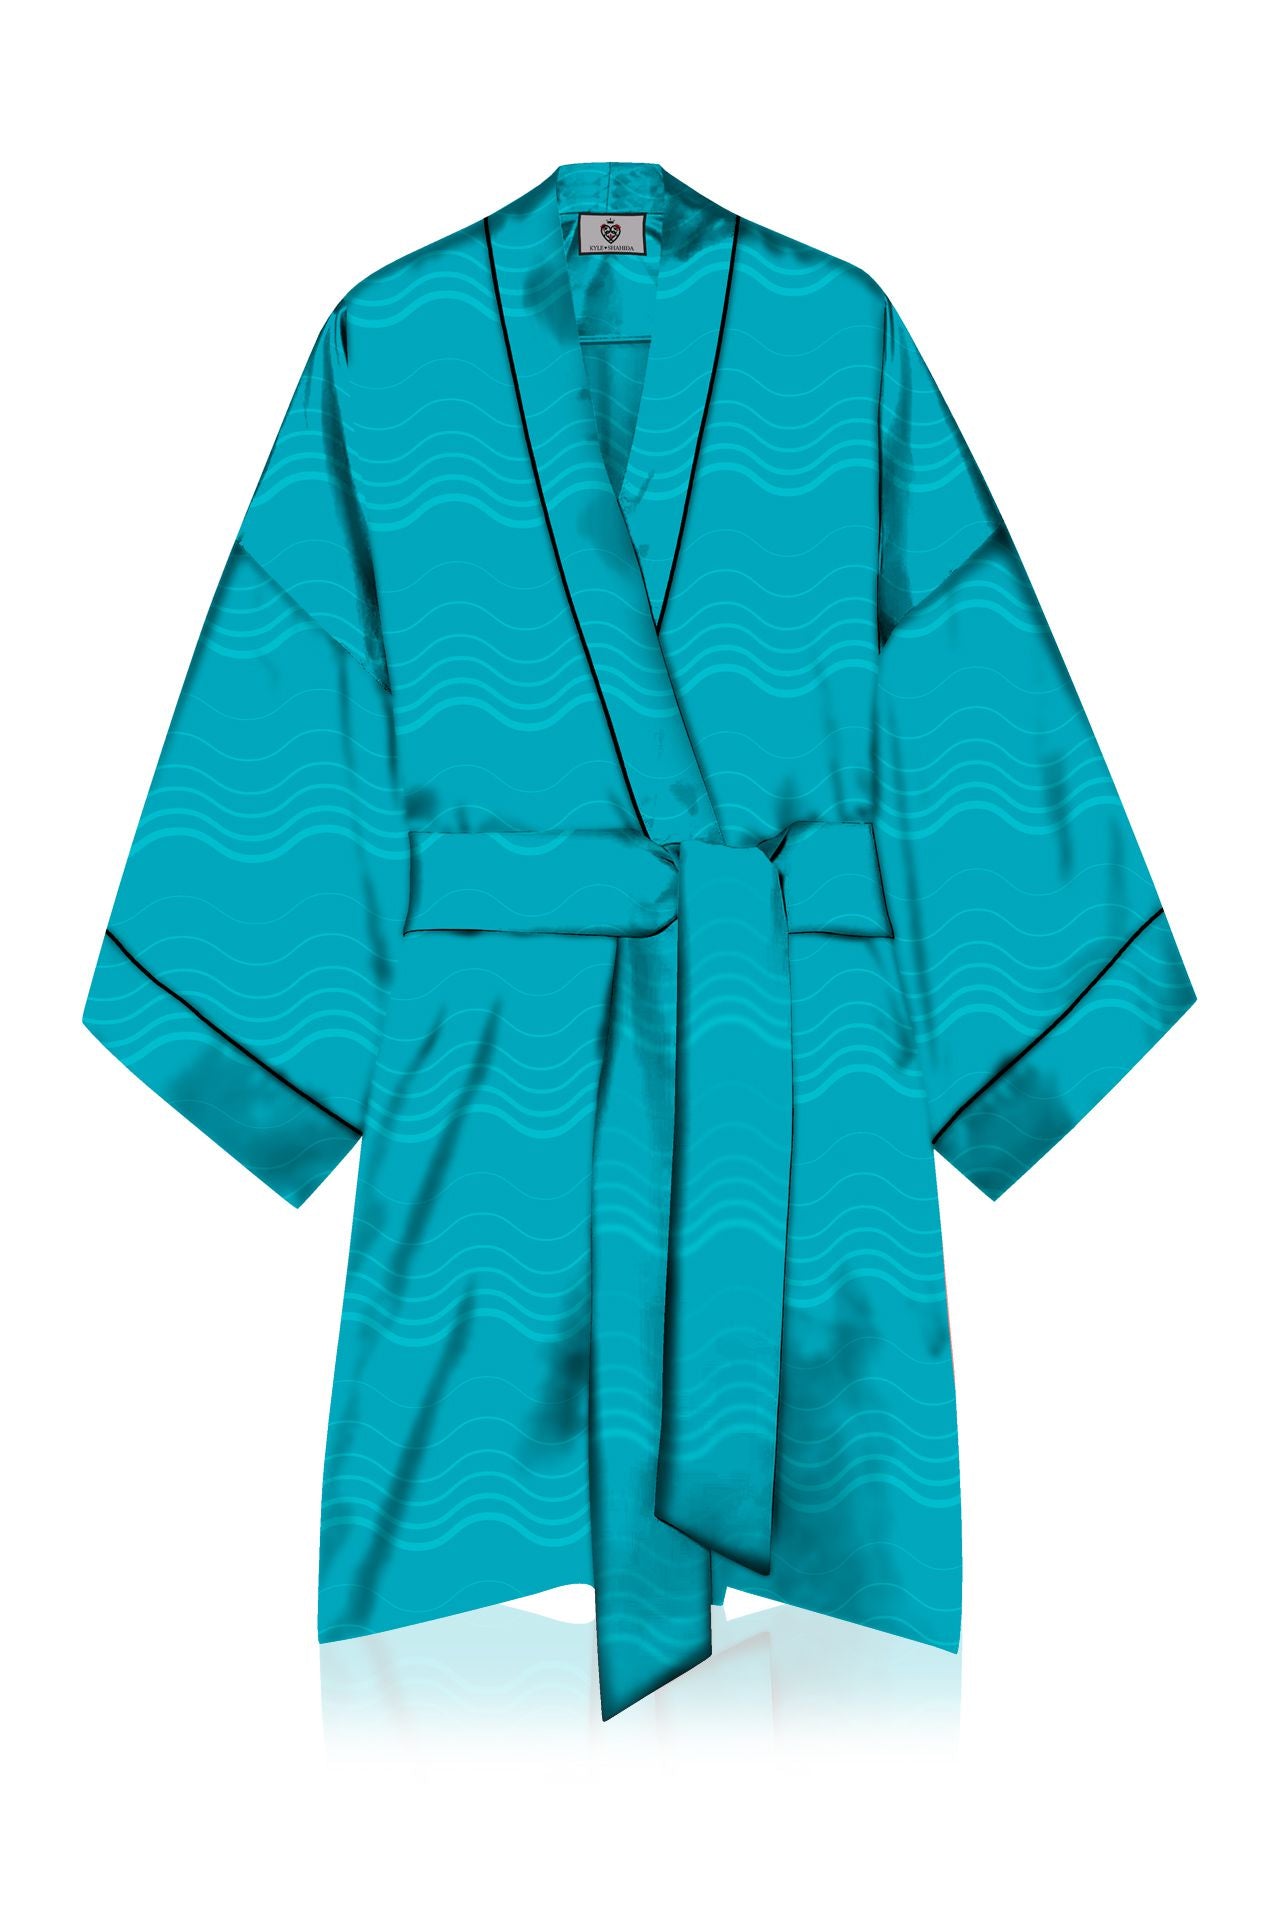 "light blue kimono robe" "Kyle X Shahida" "blue silk robe" "womens silk robe short"